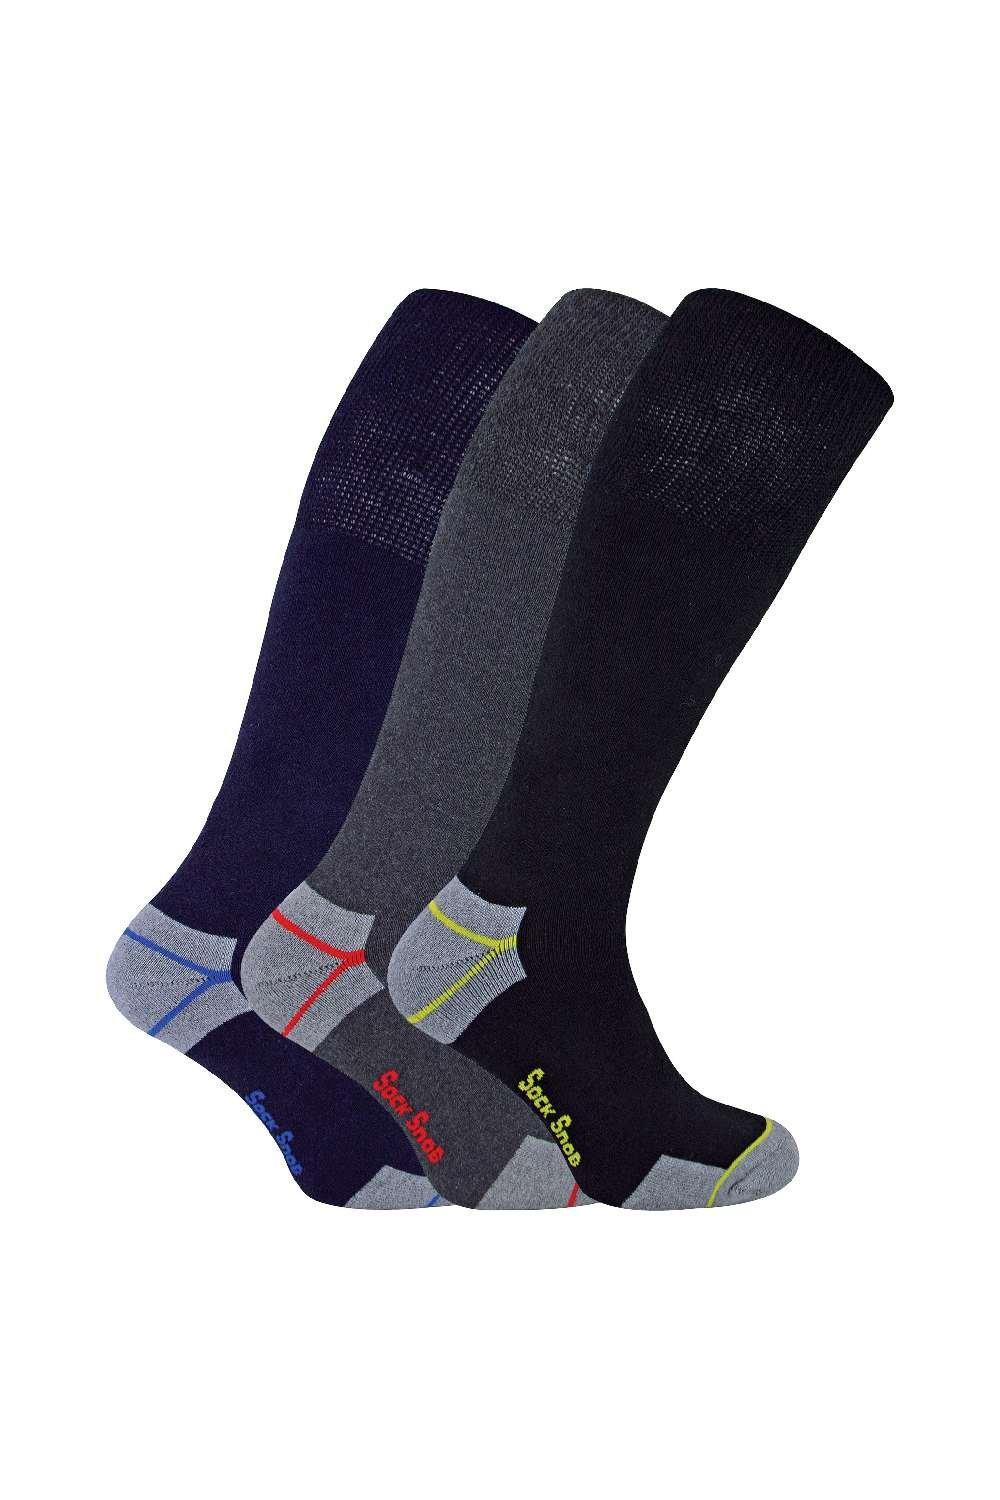 6 Pair Long Knee High Work Socks for Steel Toe Boots